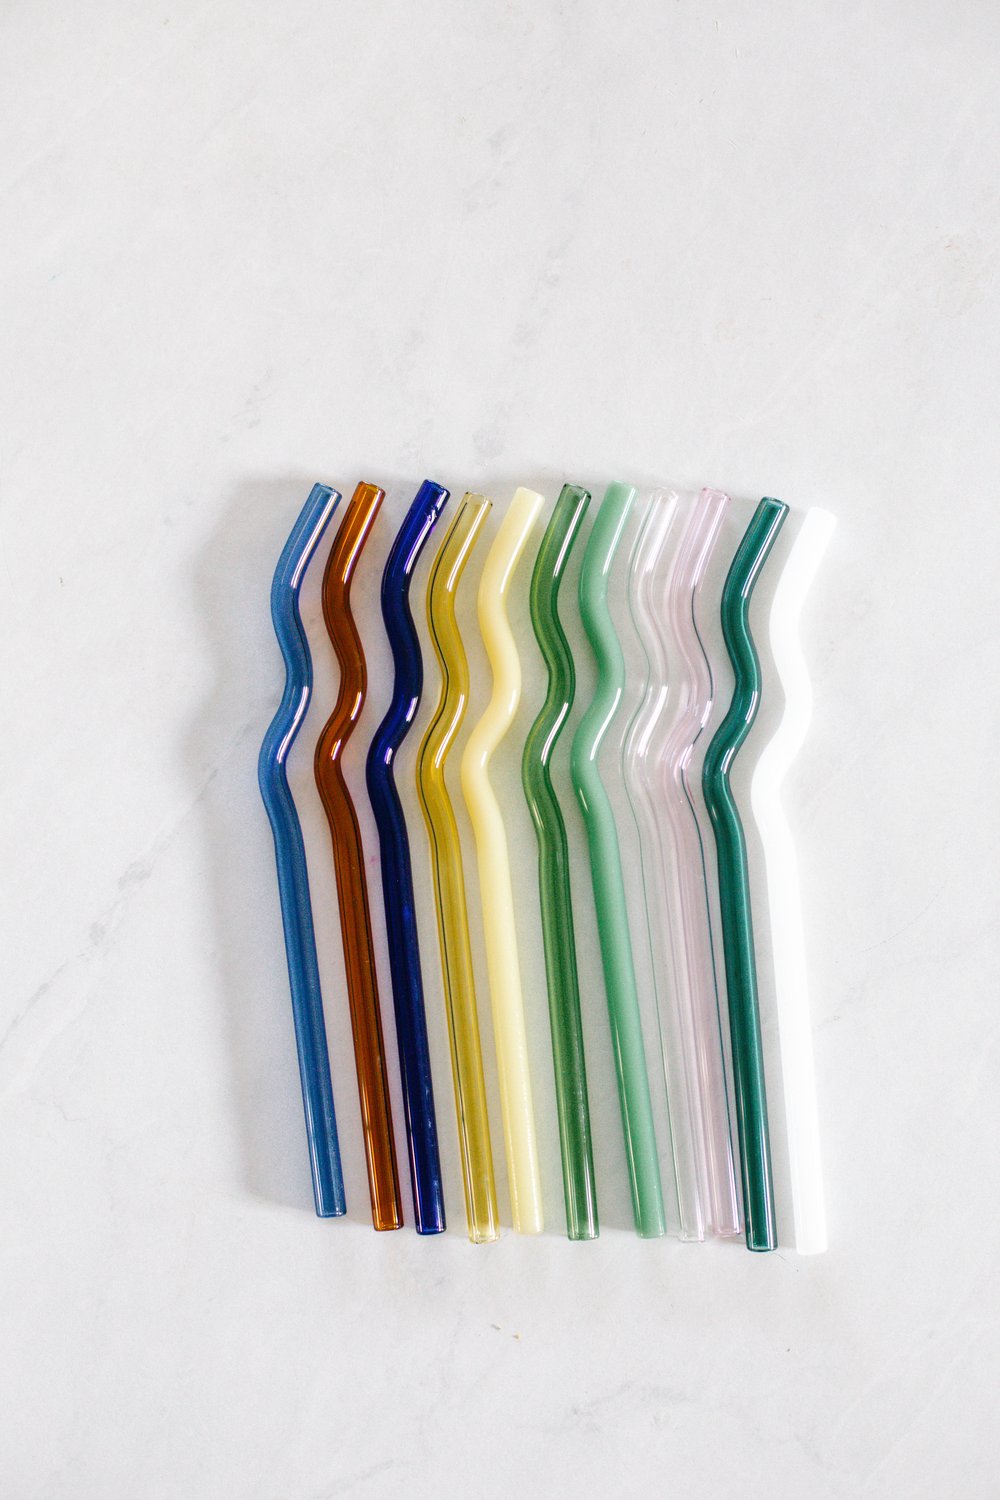 Wavy Reusable Glass Straws